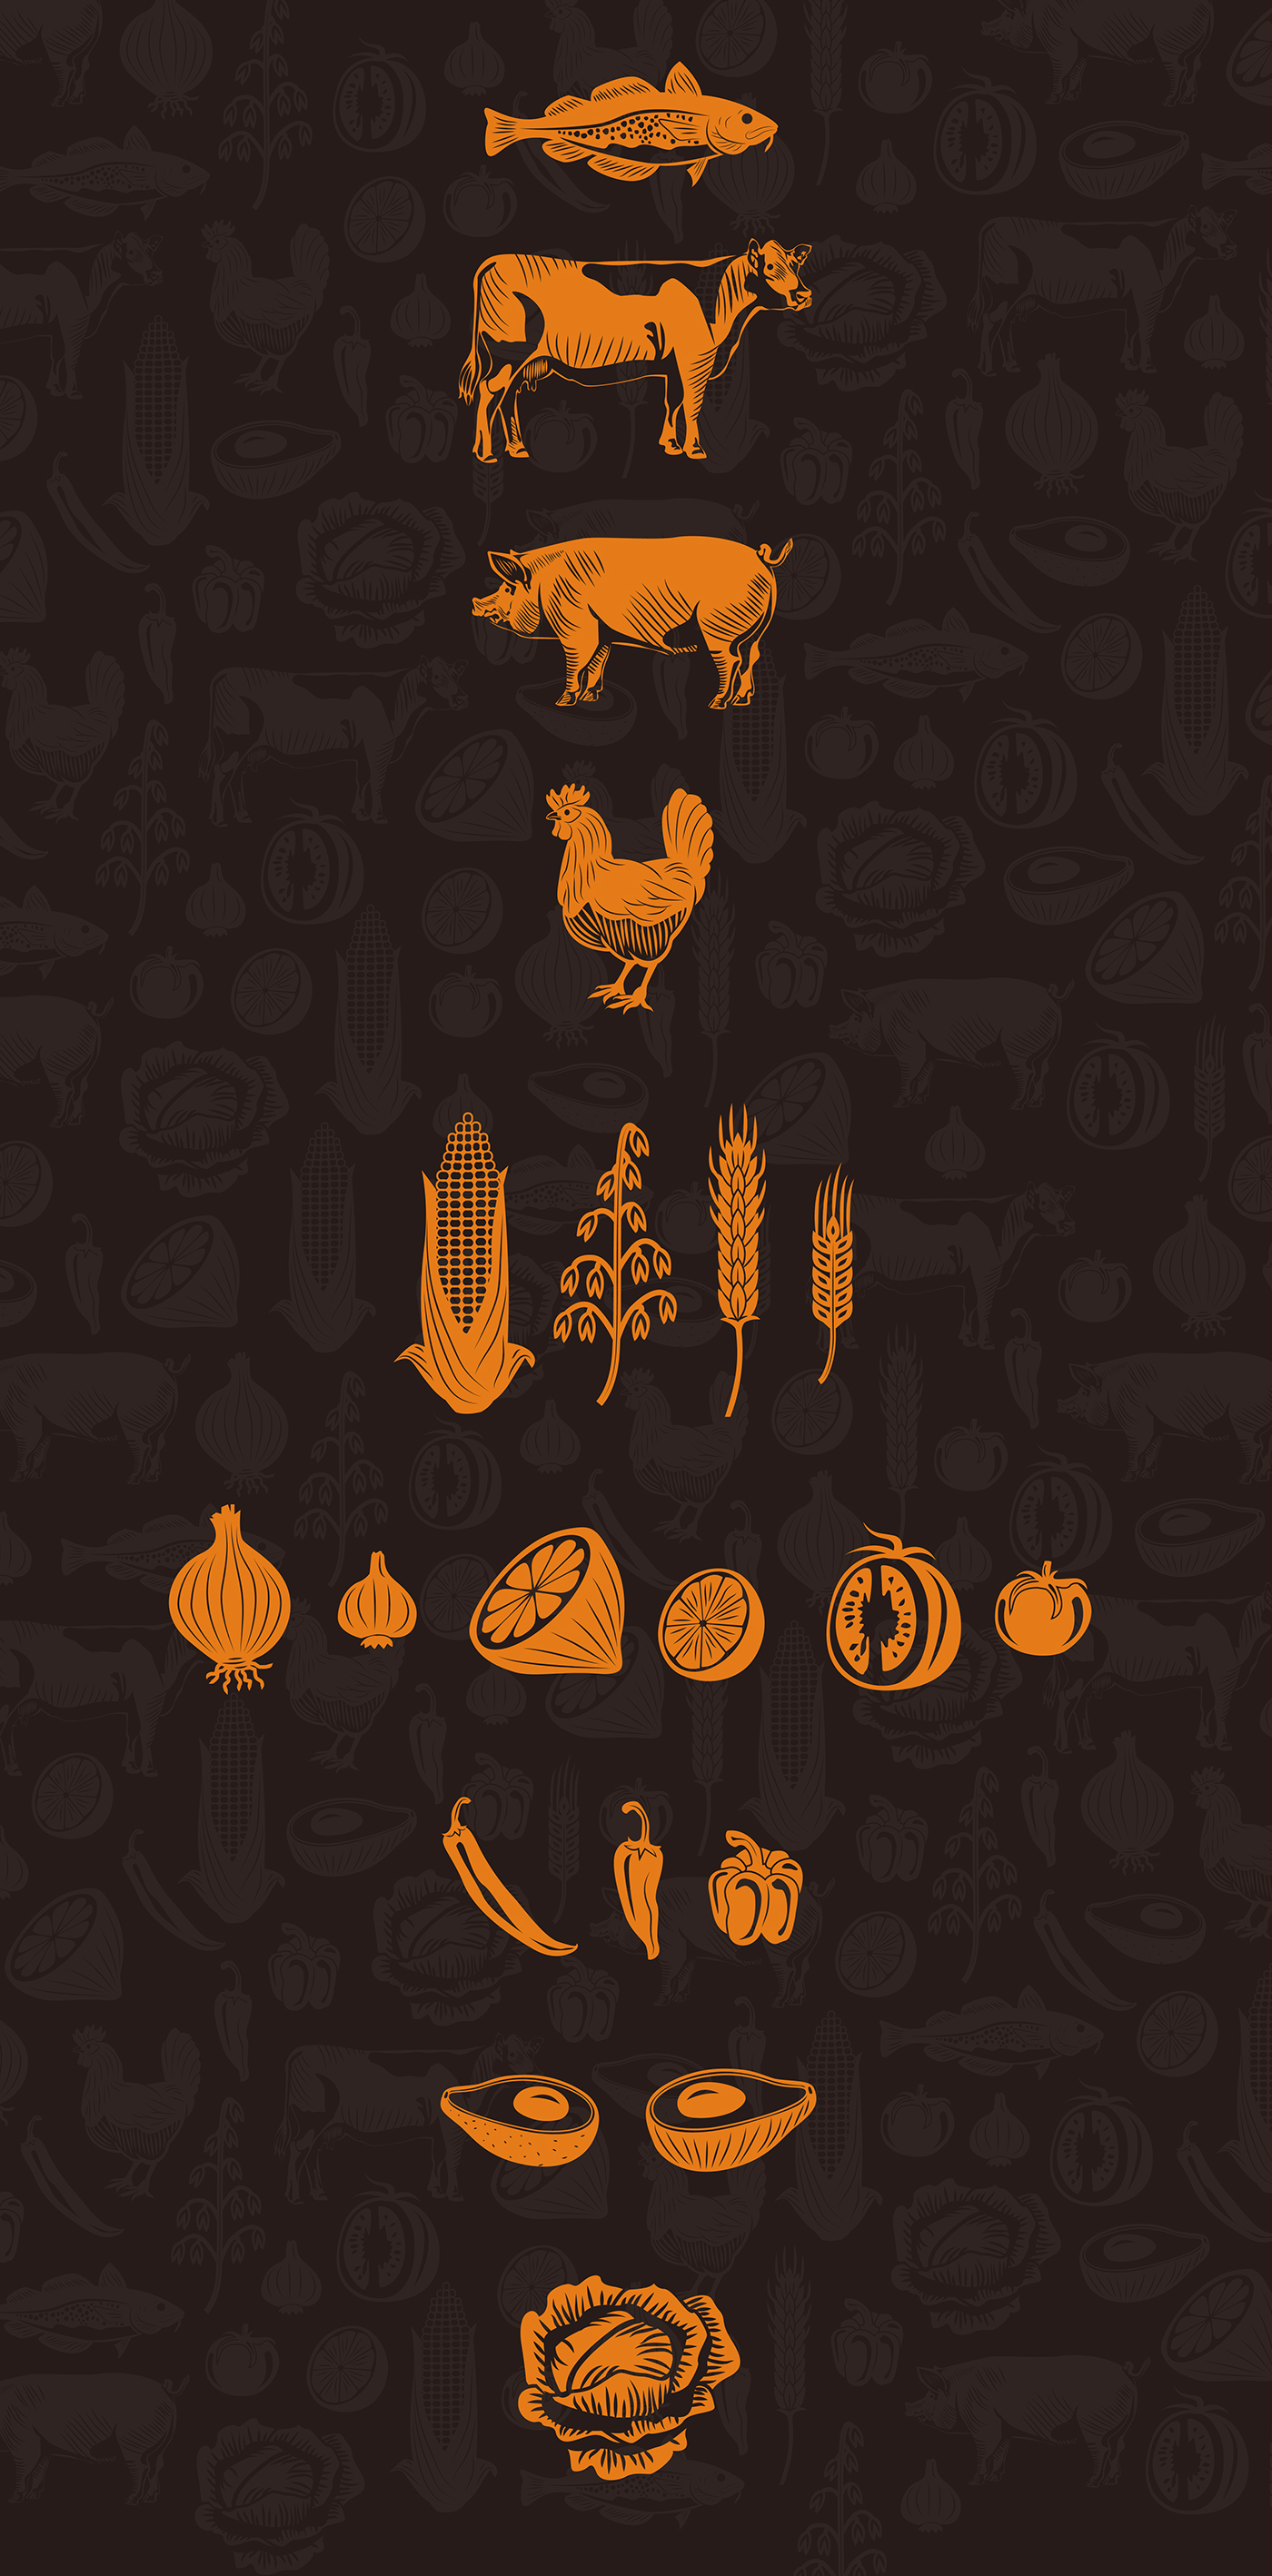 BBQ grill profile visual logo tex-mex cajun creole Mexican Food 